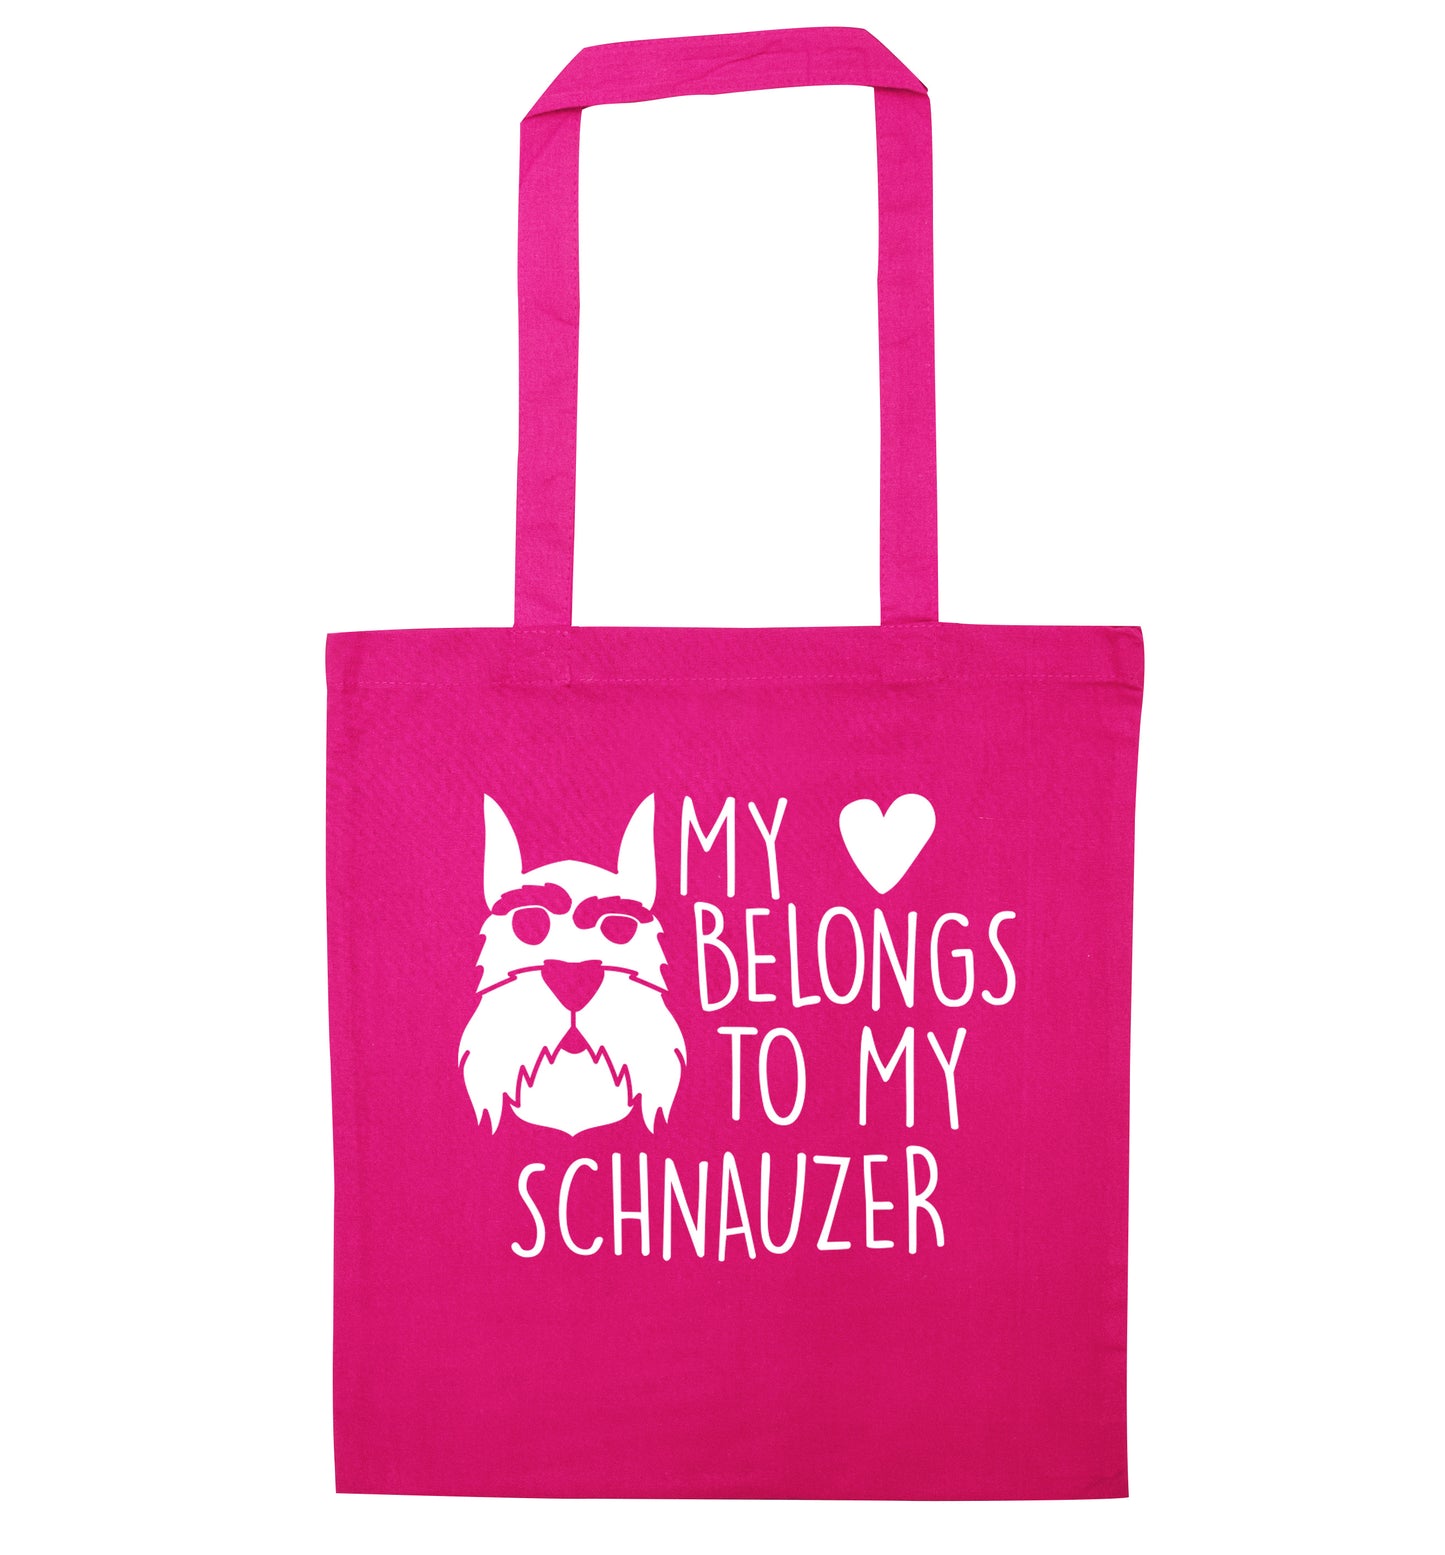 My heart belongs to my schnauzer pink tote bag